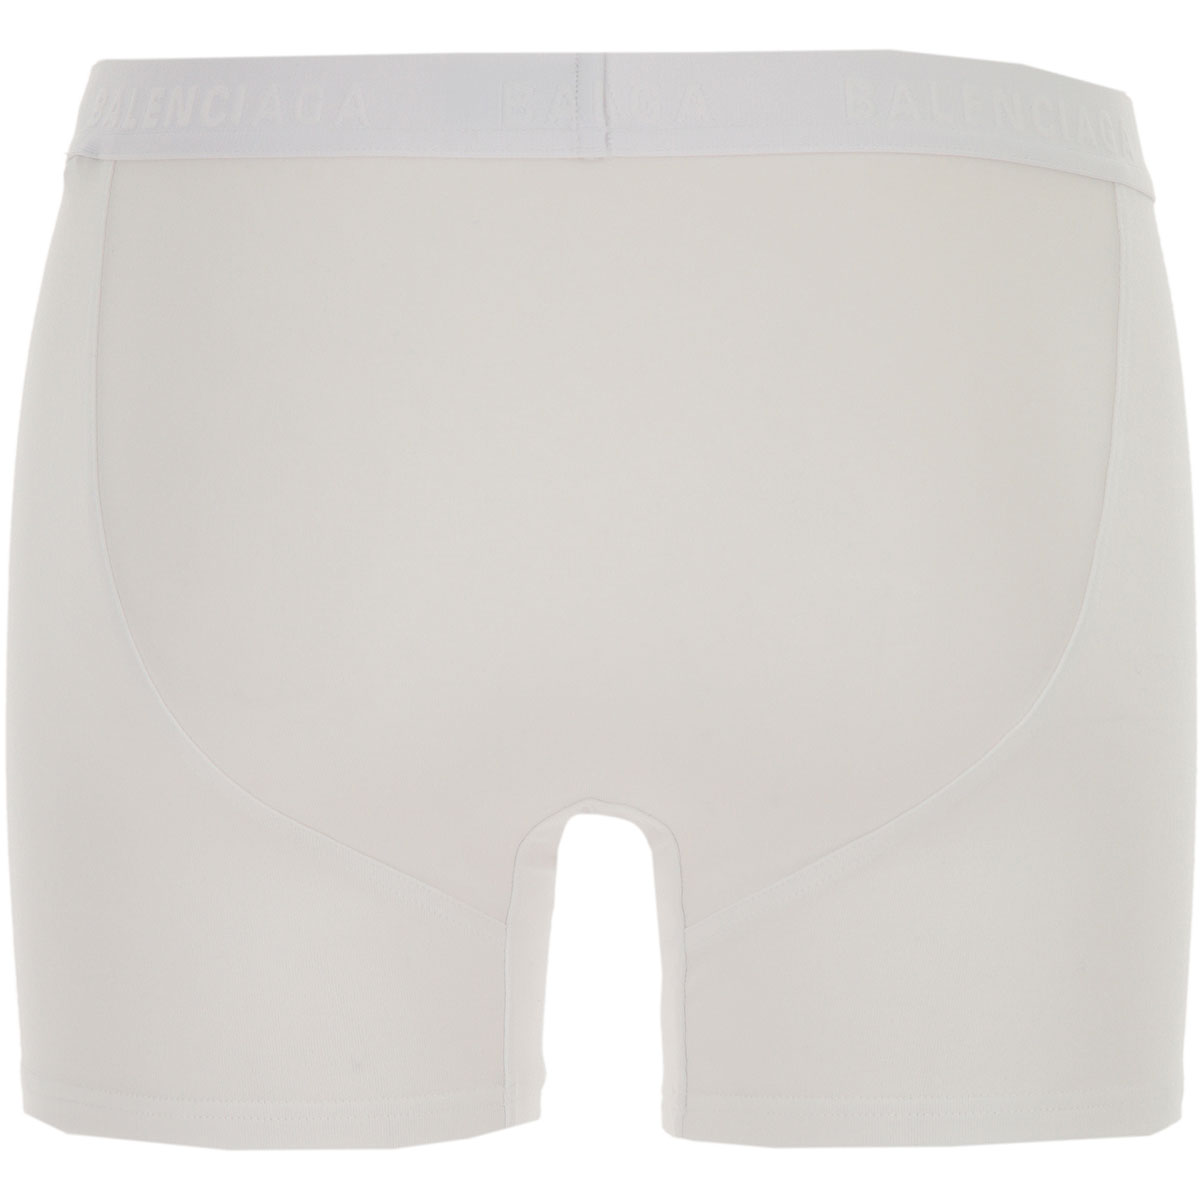 kost I stor skala patron Mens Underwear Balenciaga, Style code: 657391-4a8b8-9000